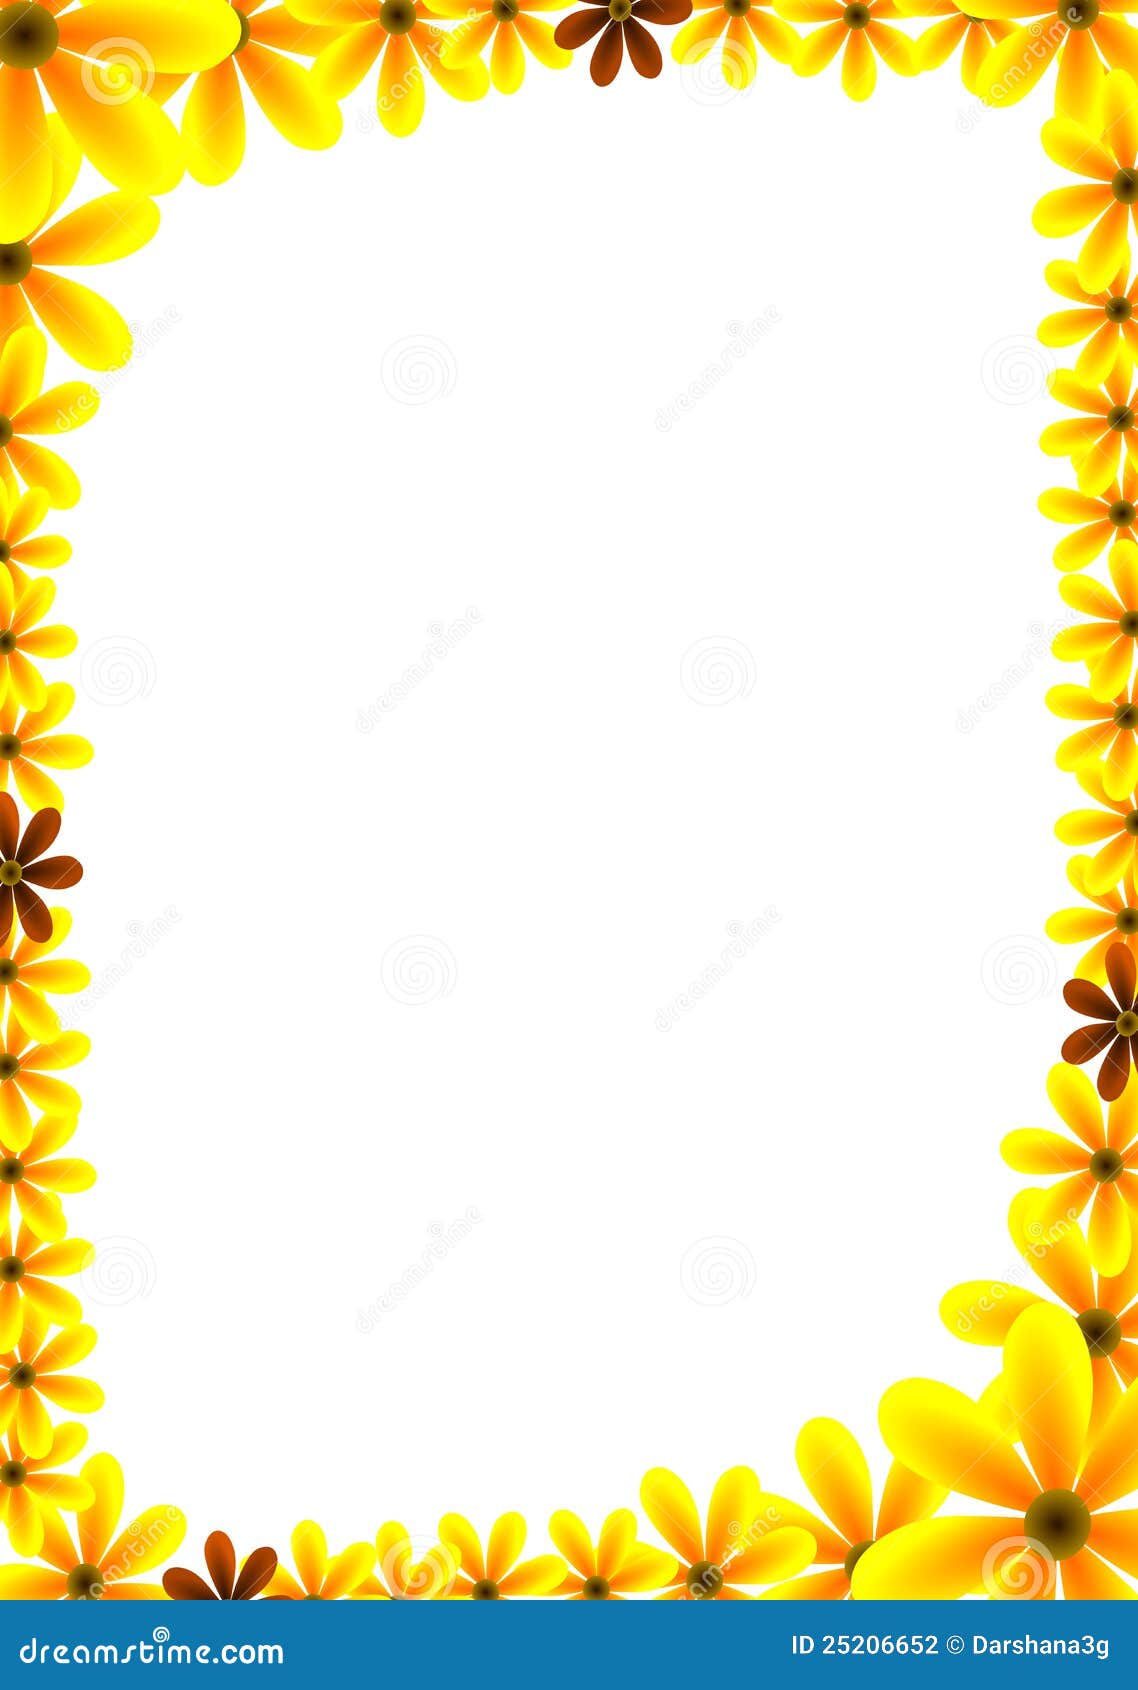 Flower border stock illustration. Image of plant, yellow - 25206652